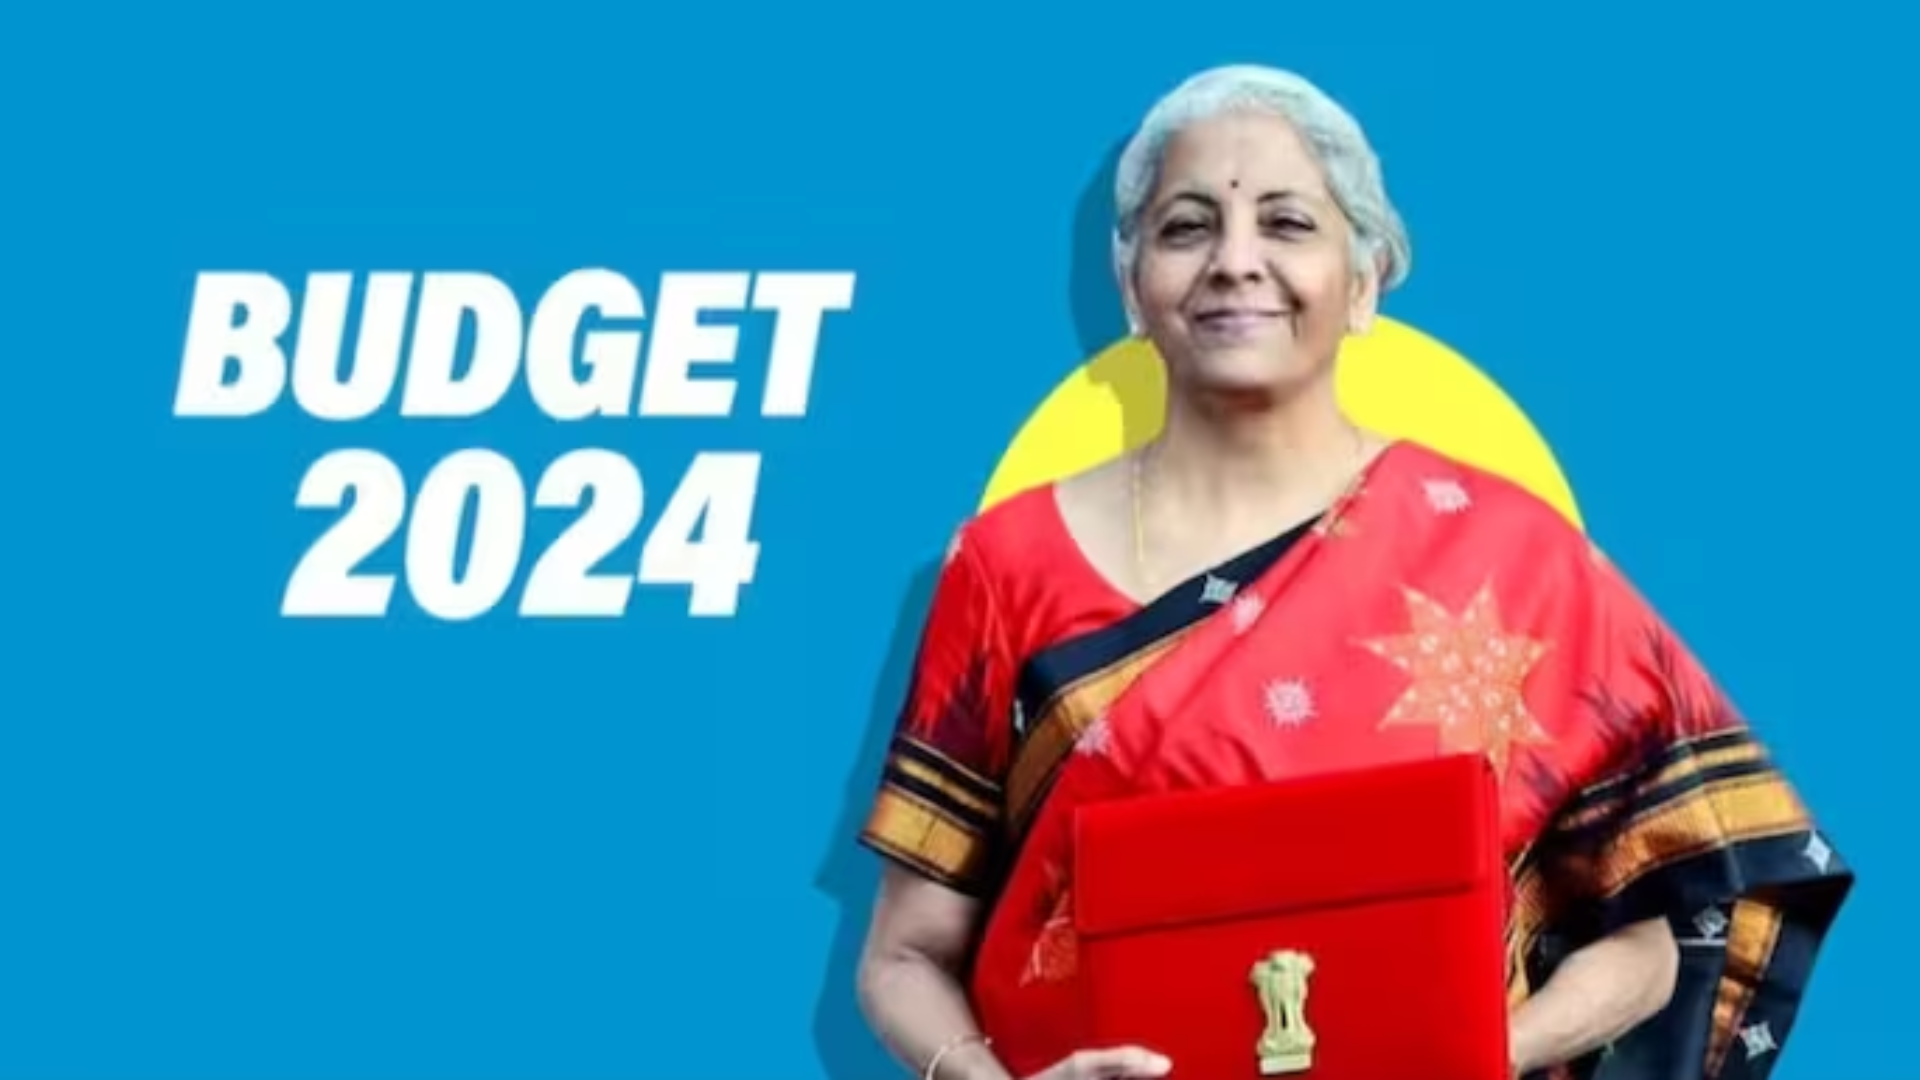 Union Budget 2024: Anticipation Builds as Finance Minister Nirmala Sitharaman Prepares to Unveil Financial Plan